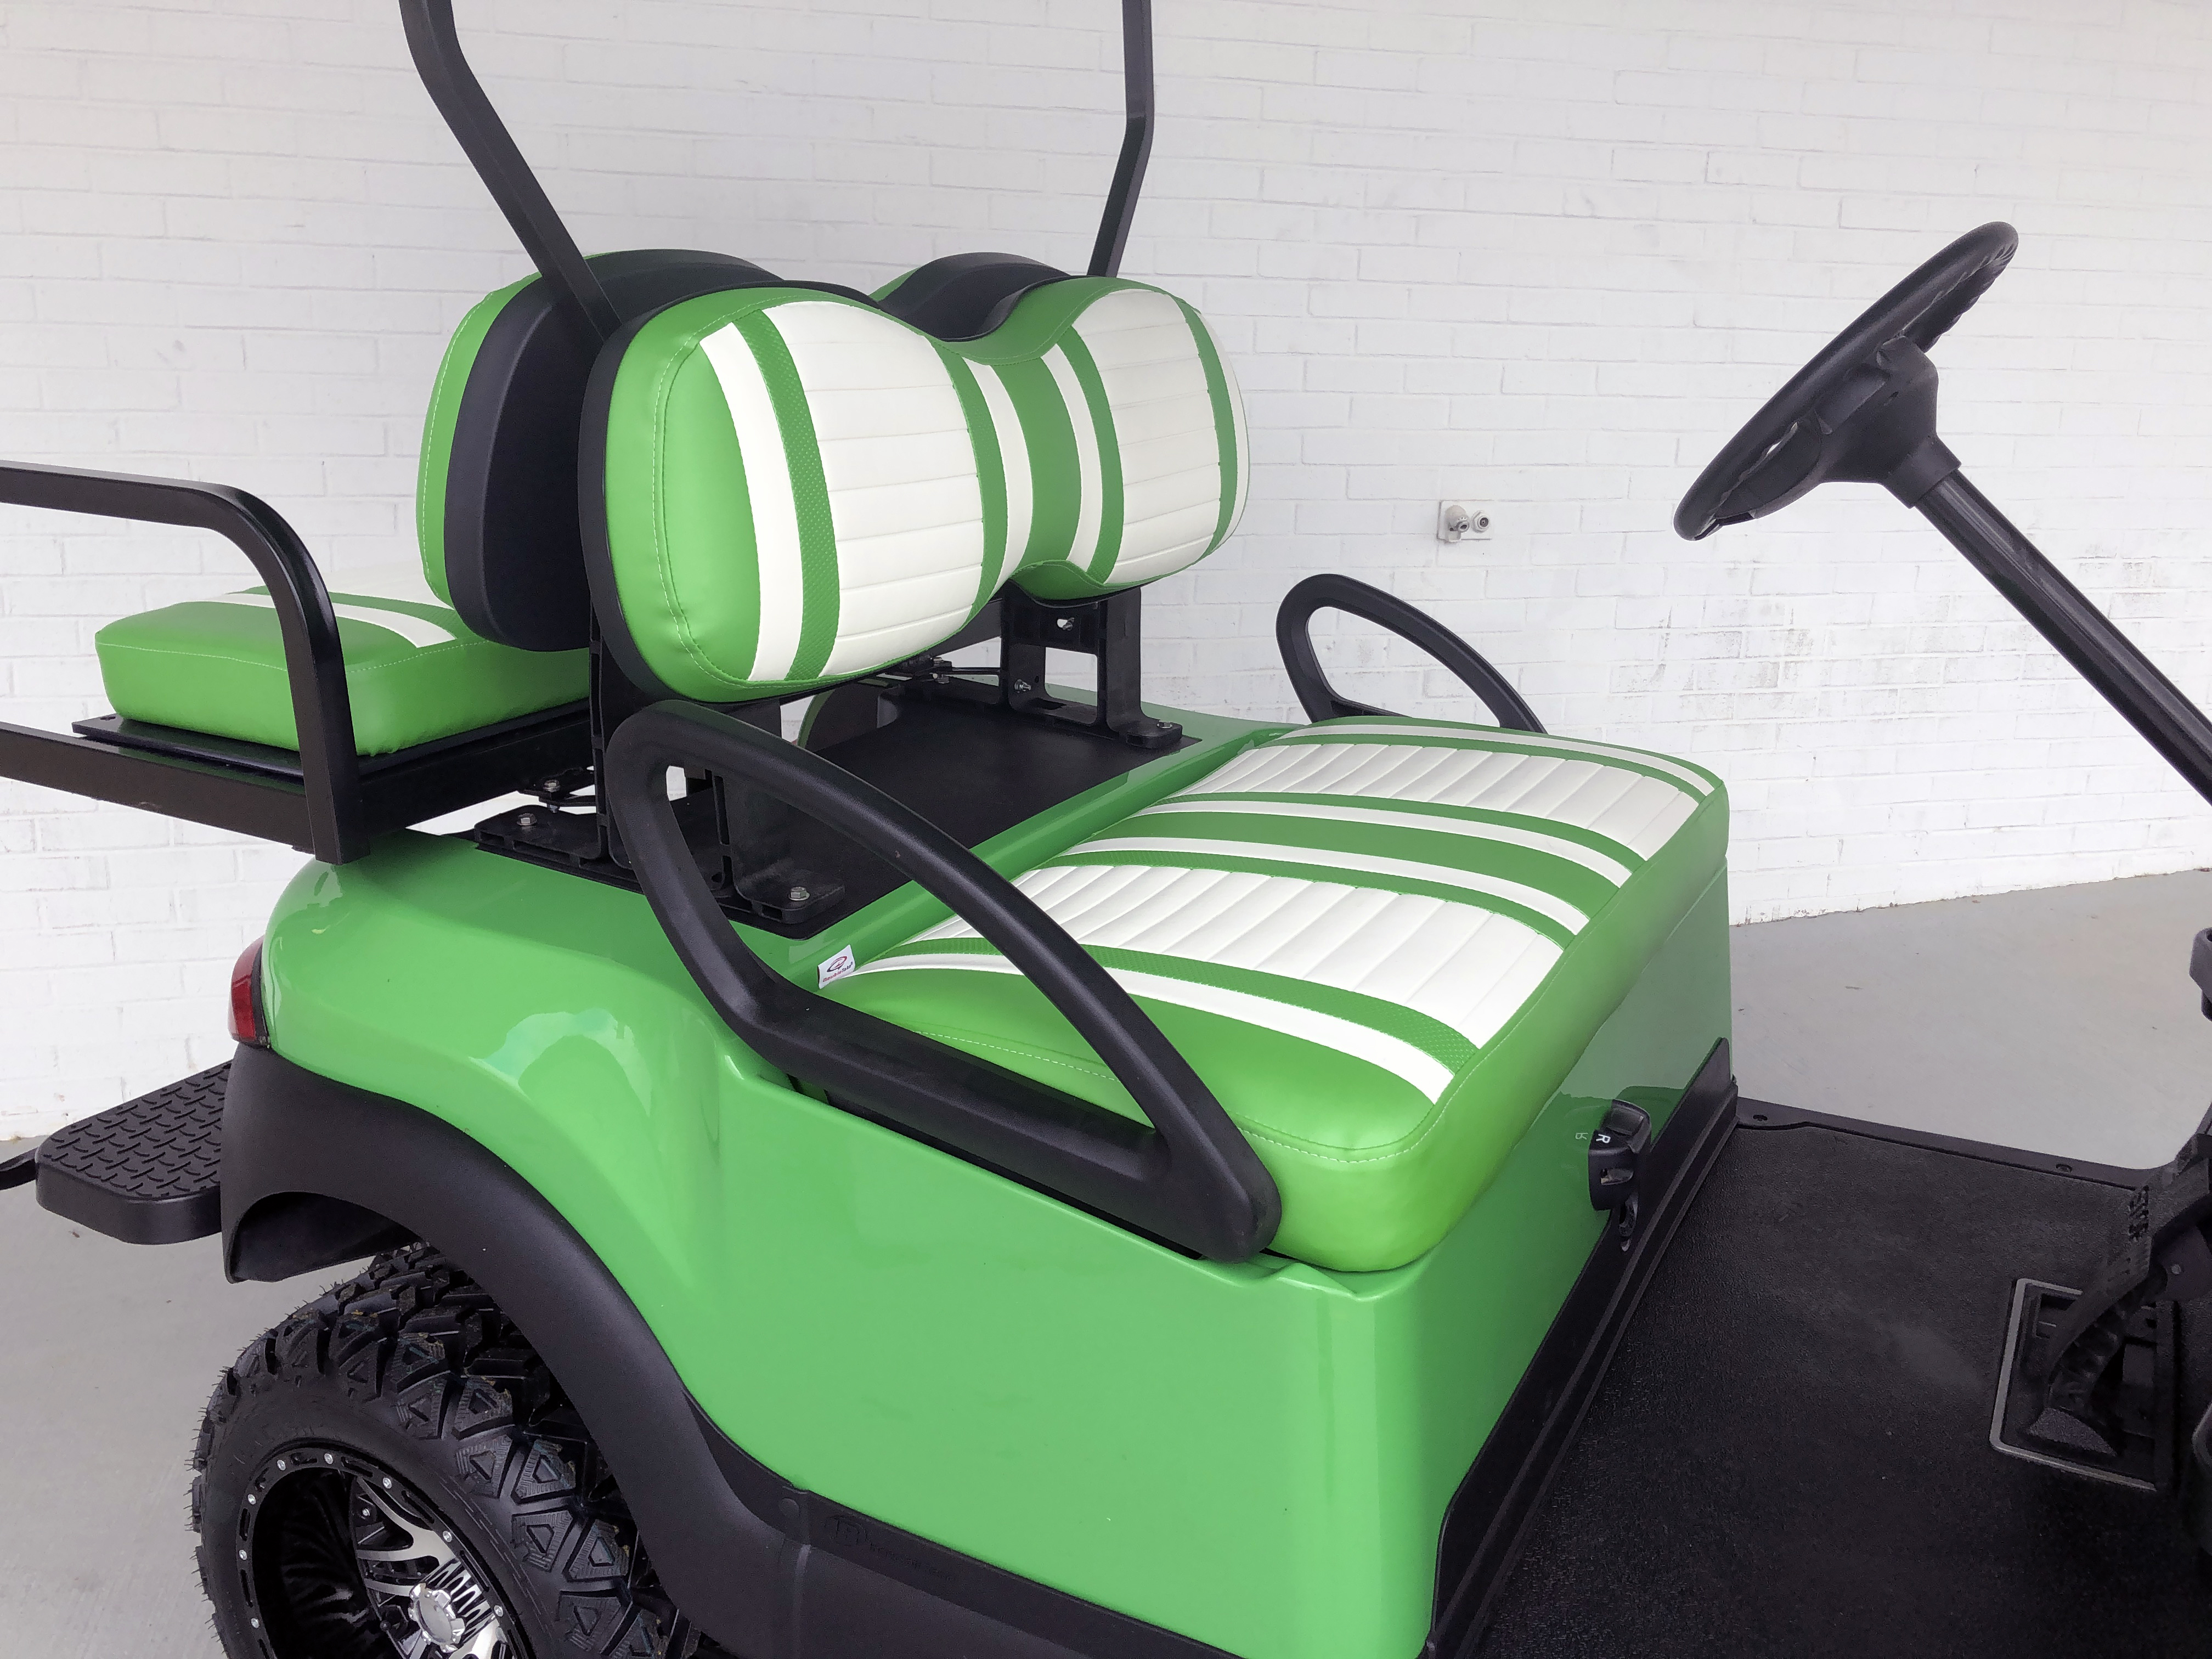 Club Car Precedent 4 Passenger Lime Green Golf Cart -#18NL-LG from